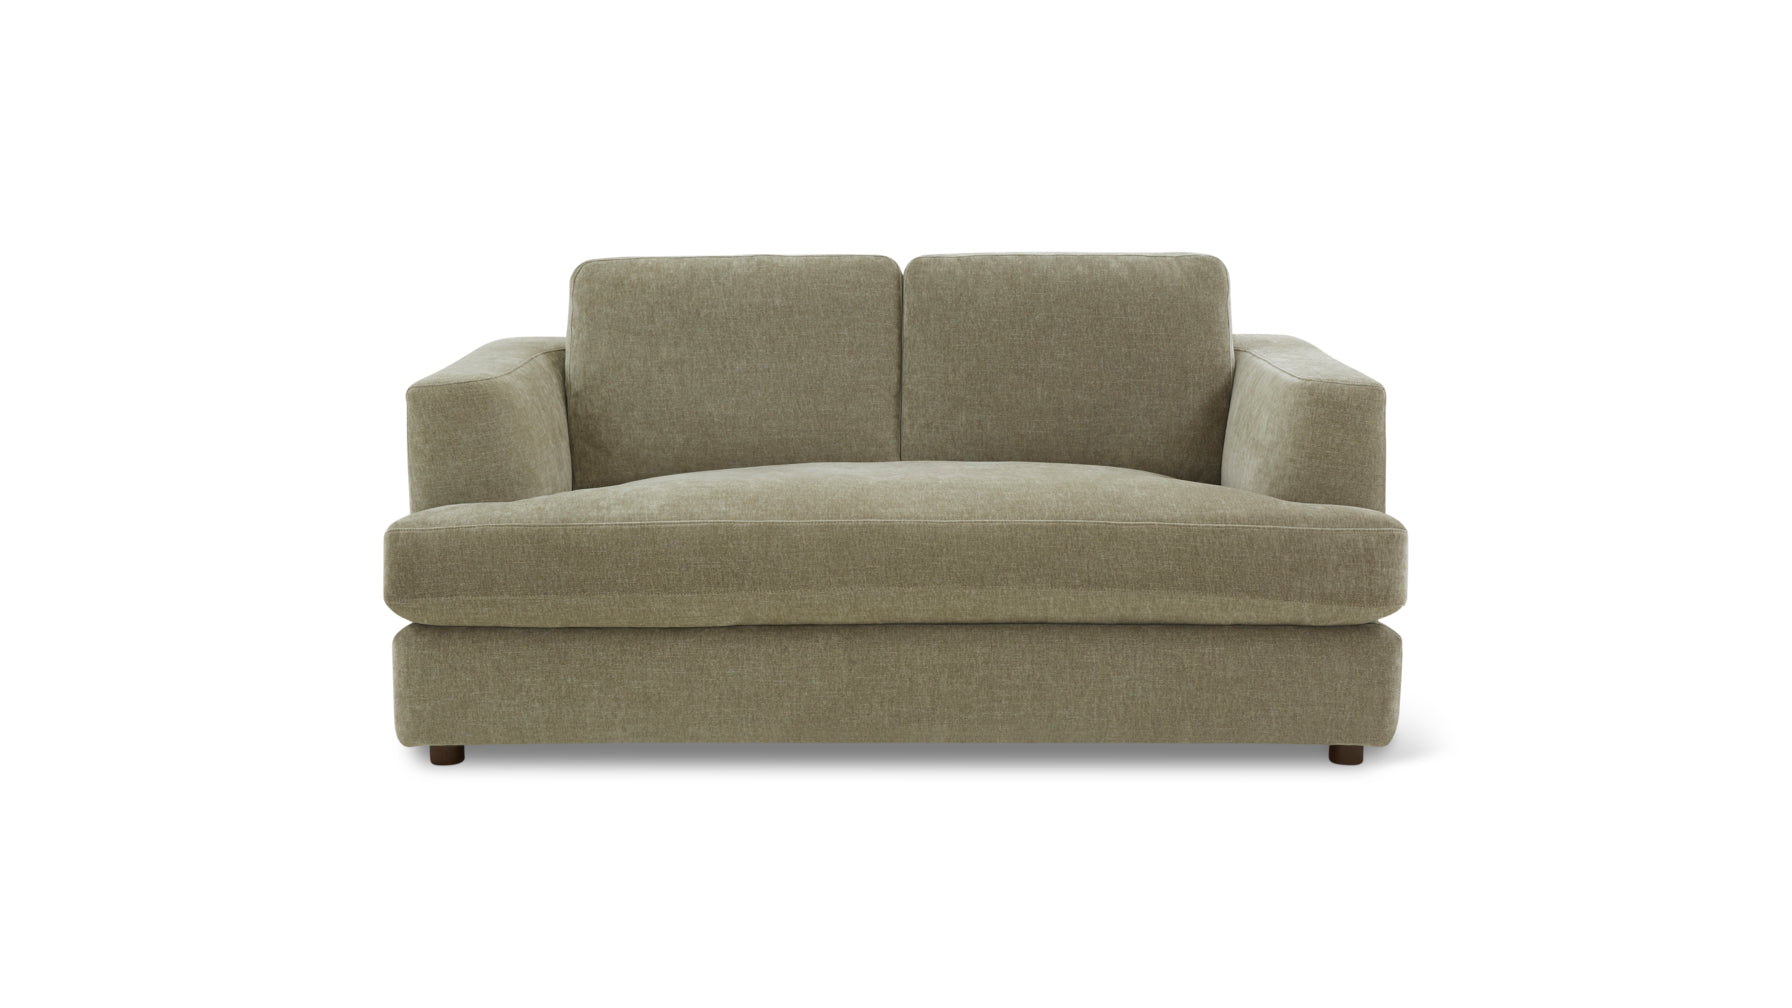 Good Company Sofa, 2 Seater, Artichoke - Image 1